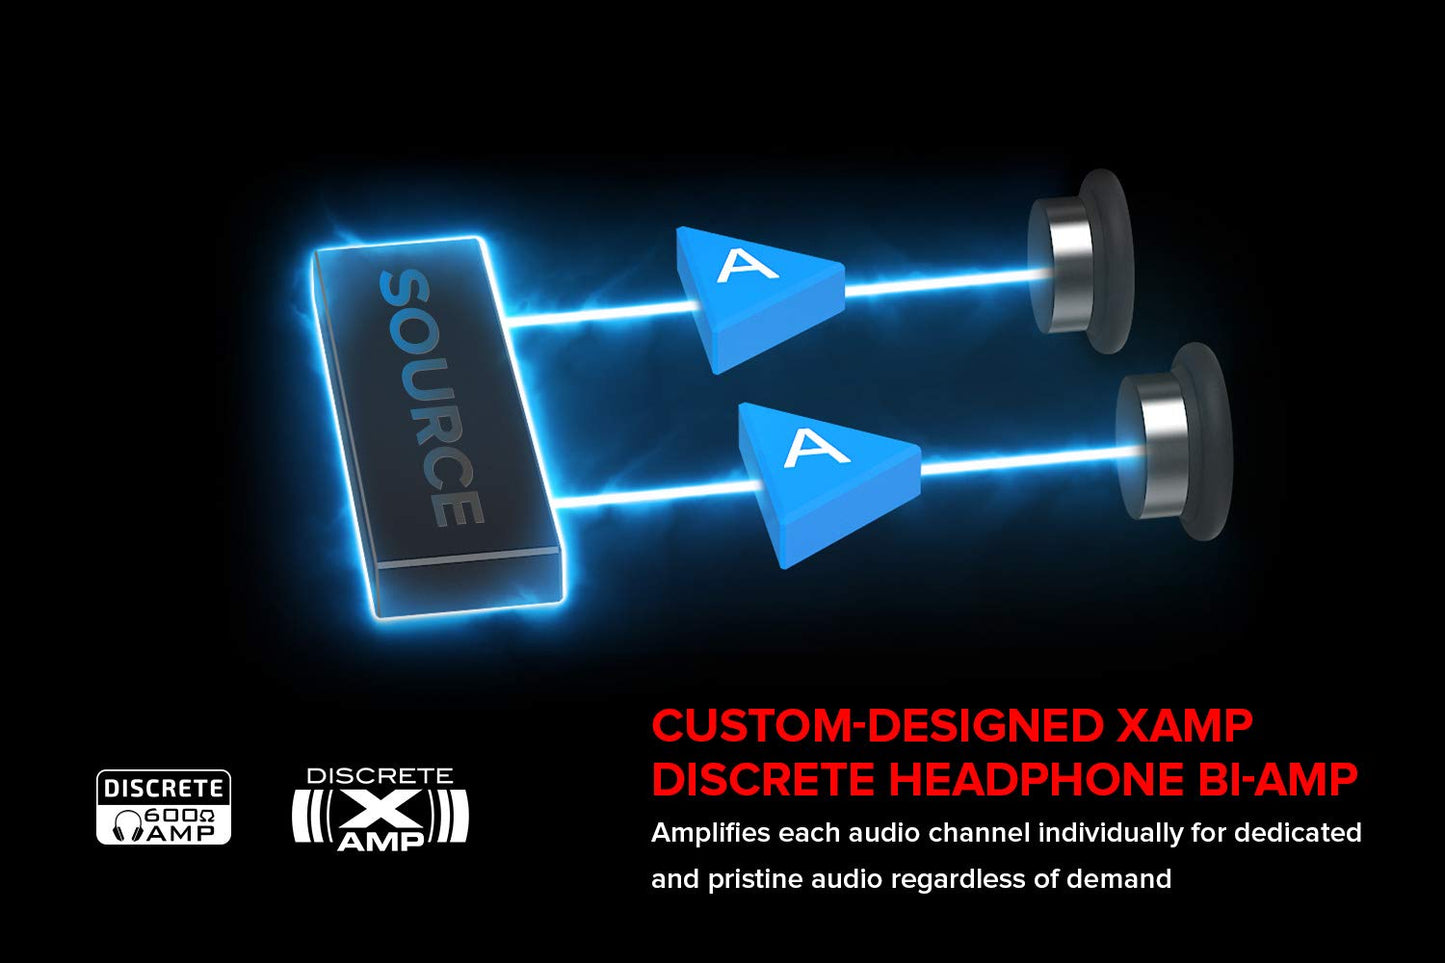 CREATIVE Sound BlasterX AE-5 Plus Soundcard Pro Gaming White